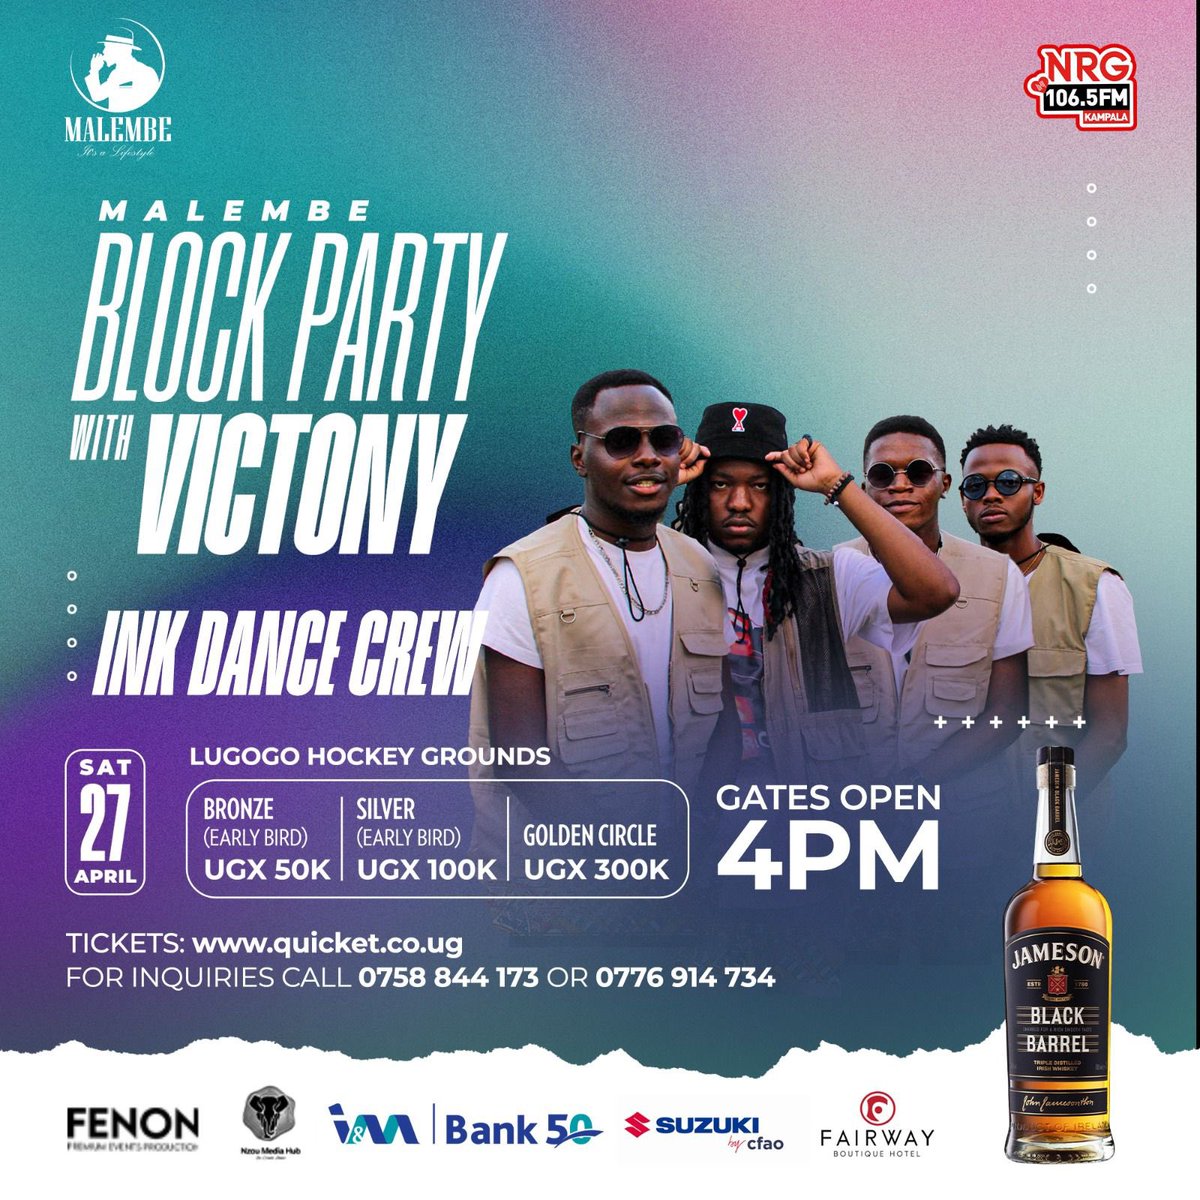 ONLY Uganda’s FINEST Performers — INK DANCE CREW

#VictonyBlockParty 🇺🇬✨

The Malembe Block Party ft @vict0ny ✨
 
27/04 | Lugogo Hockey Grounds

In partnership with @NzouMedia @nrgradioug
 
Get your 🎫 now! (🔗 in bio)

~ #EnjoyResponsibly #MalembeLifestyle #ItsaLifestyle ✨